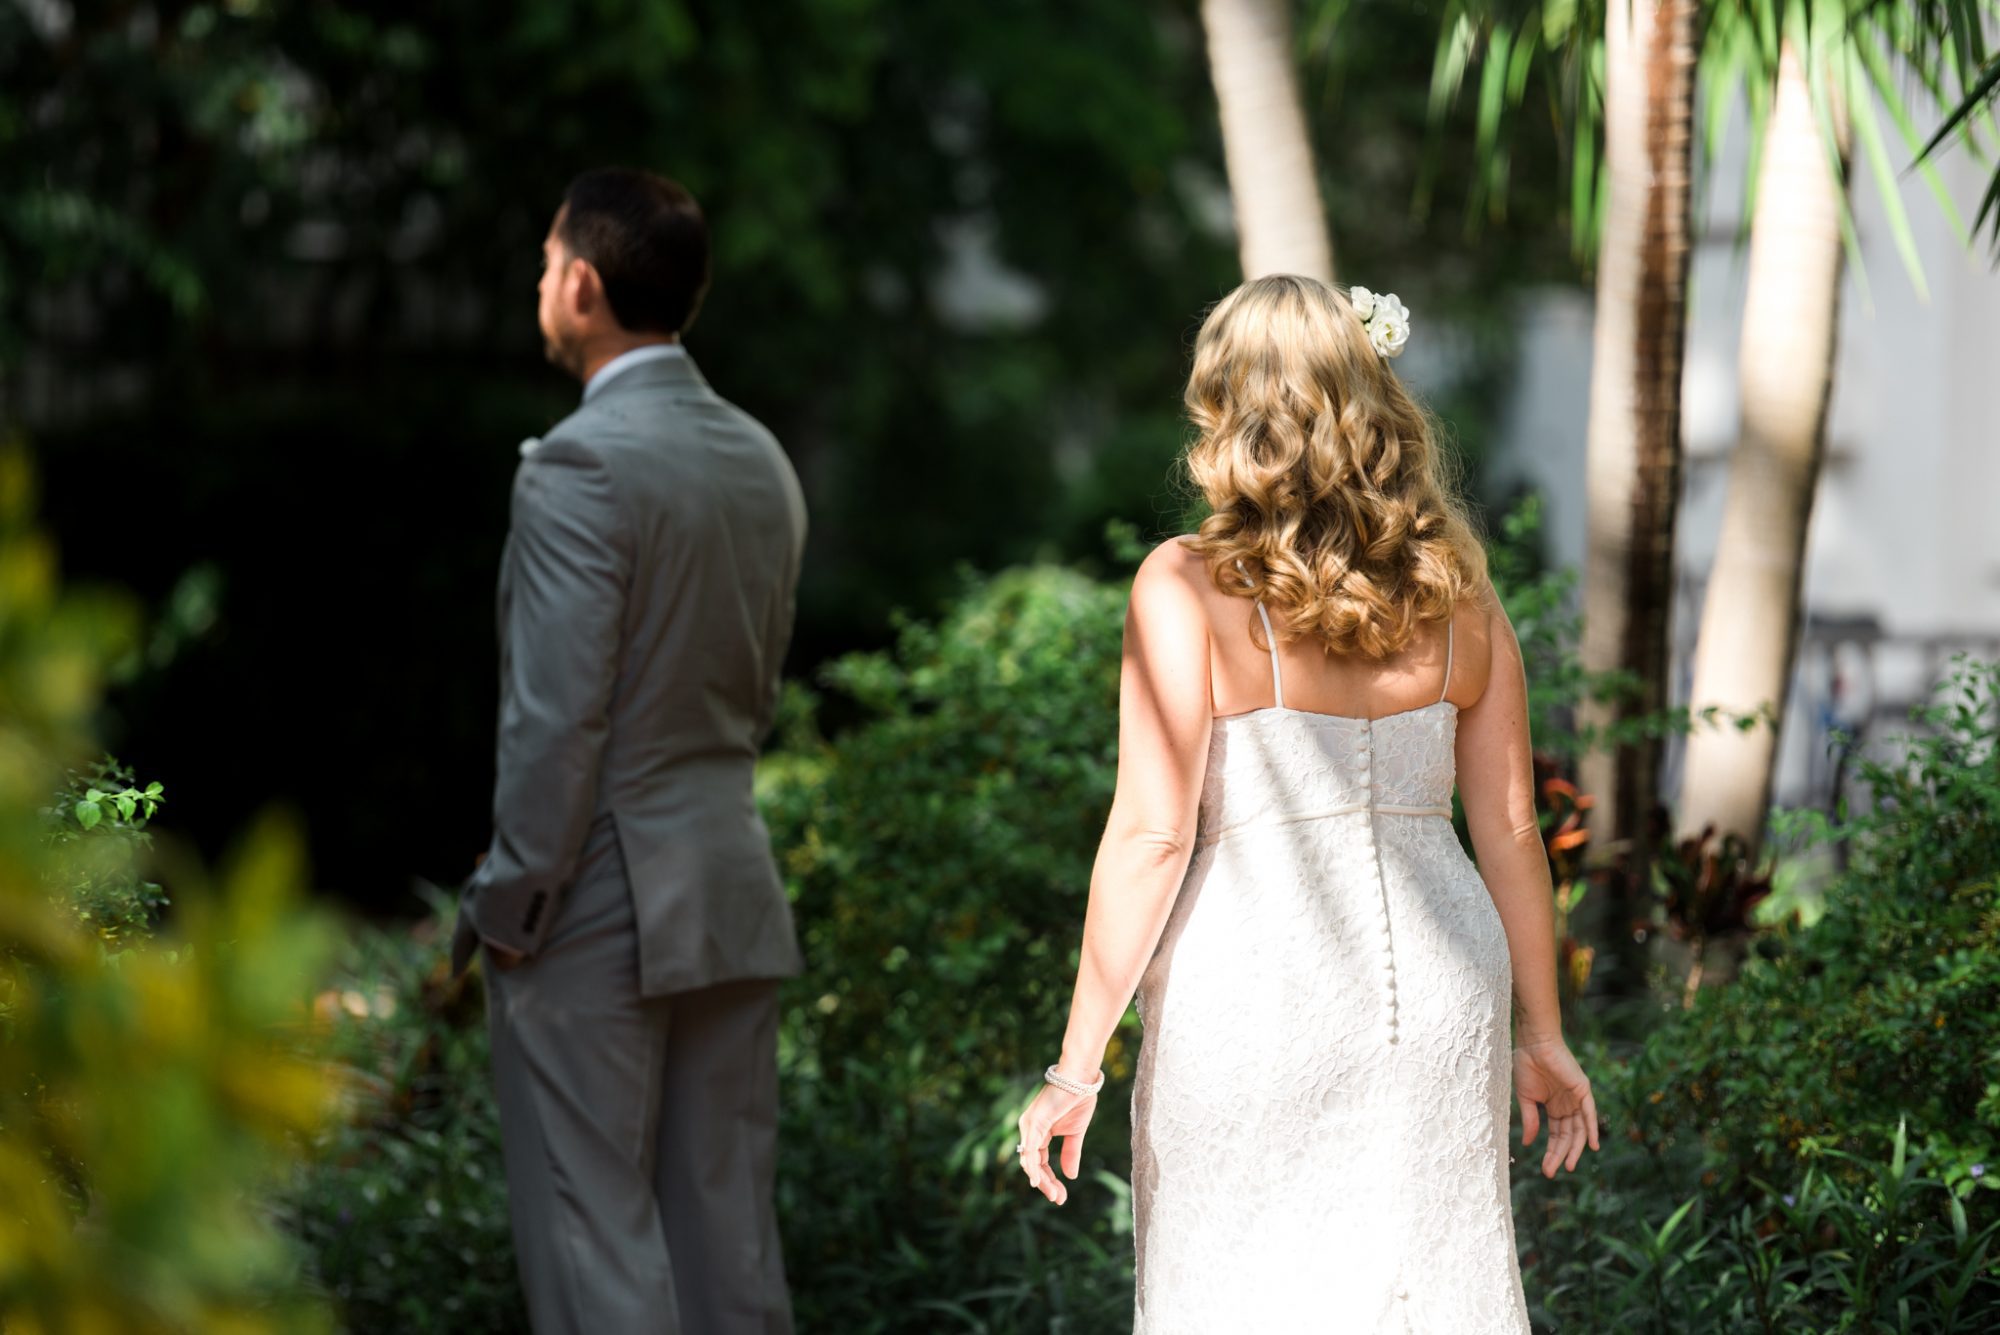 A couple's elegant wedding ceremony at the Key West Audubon House and Gardens.